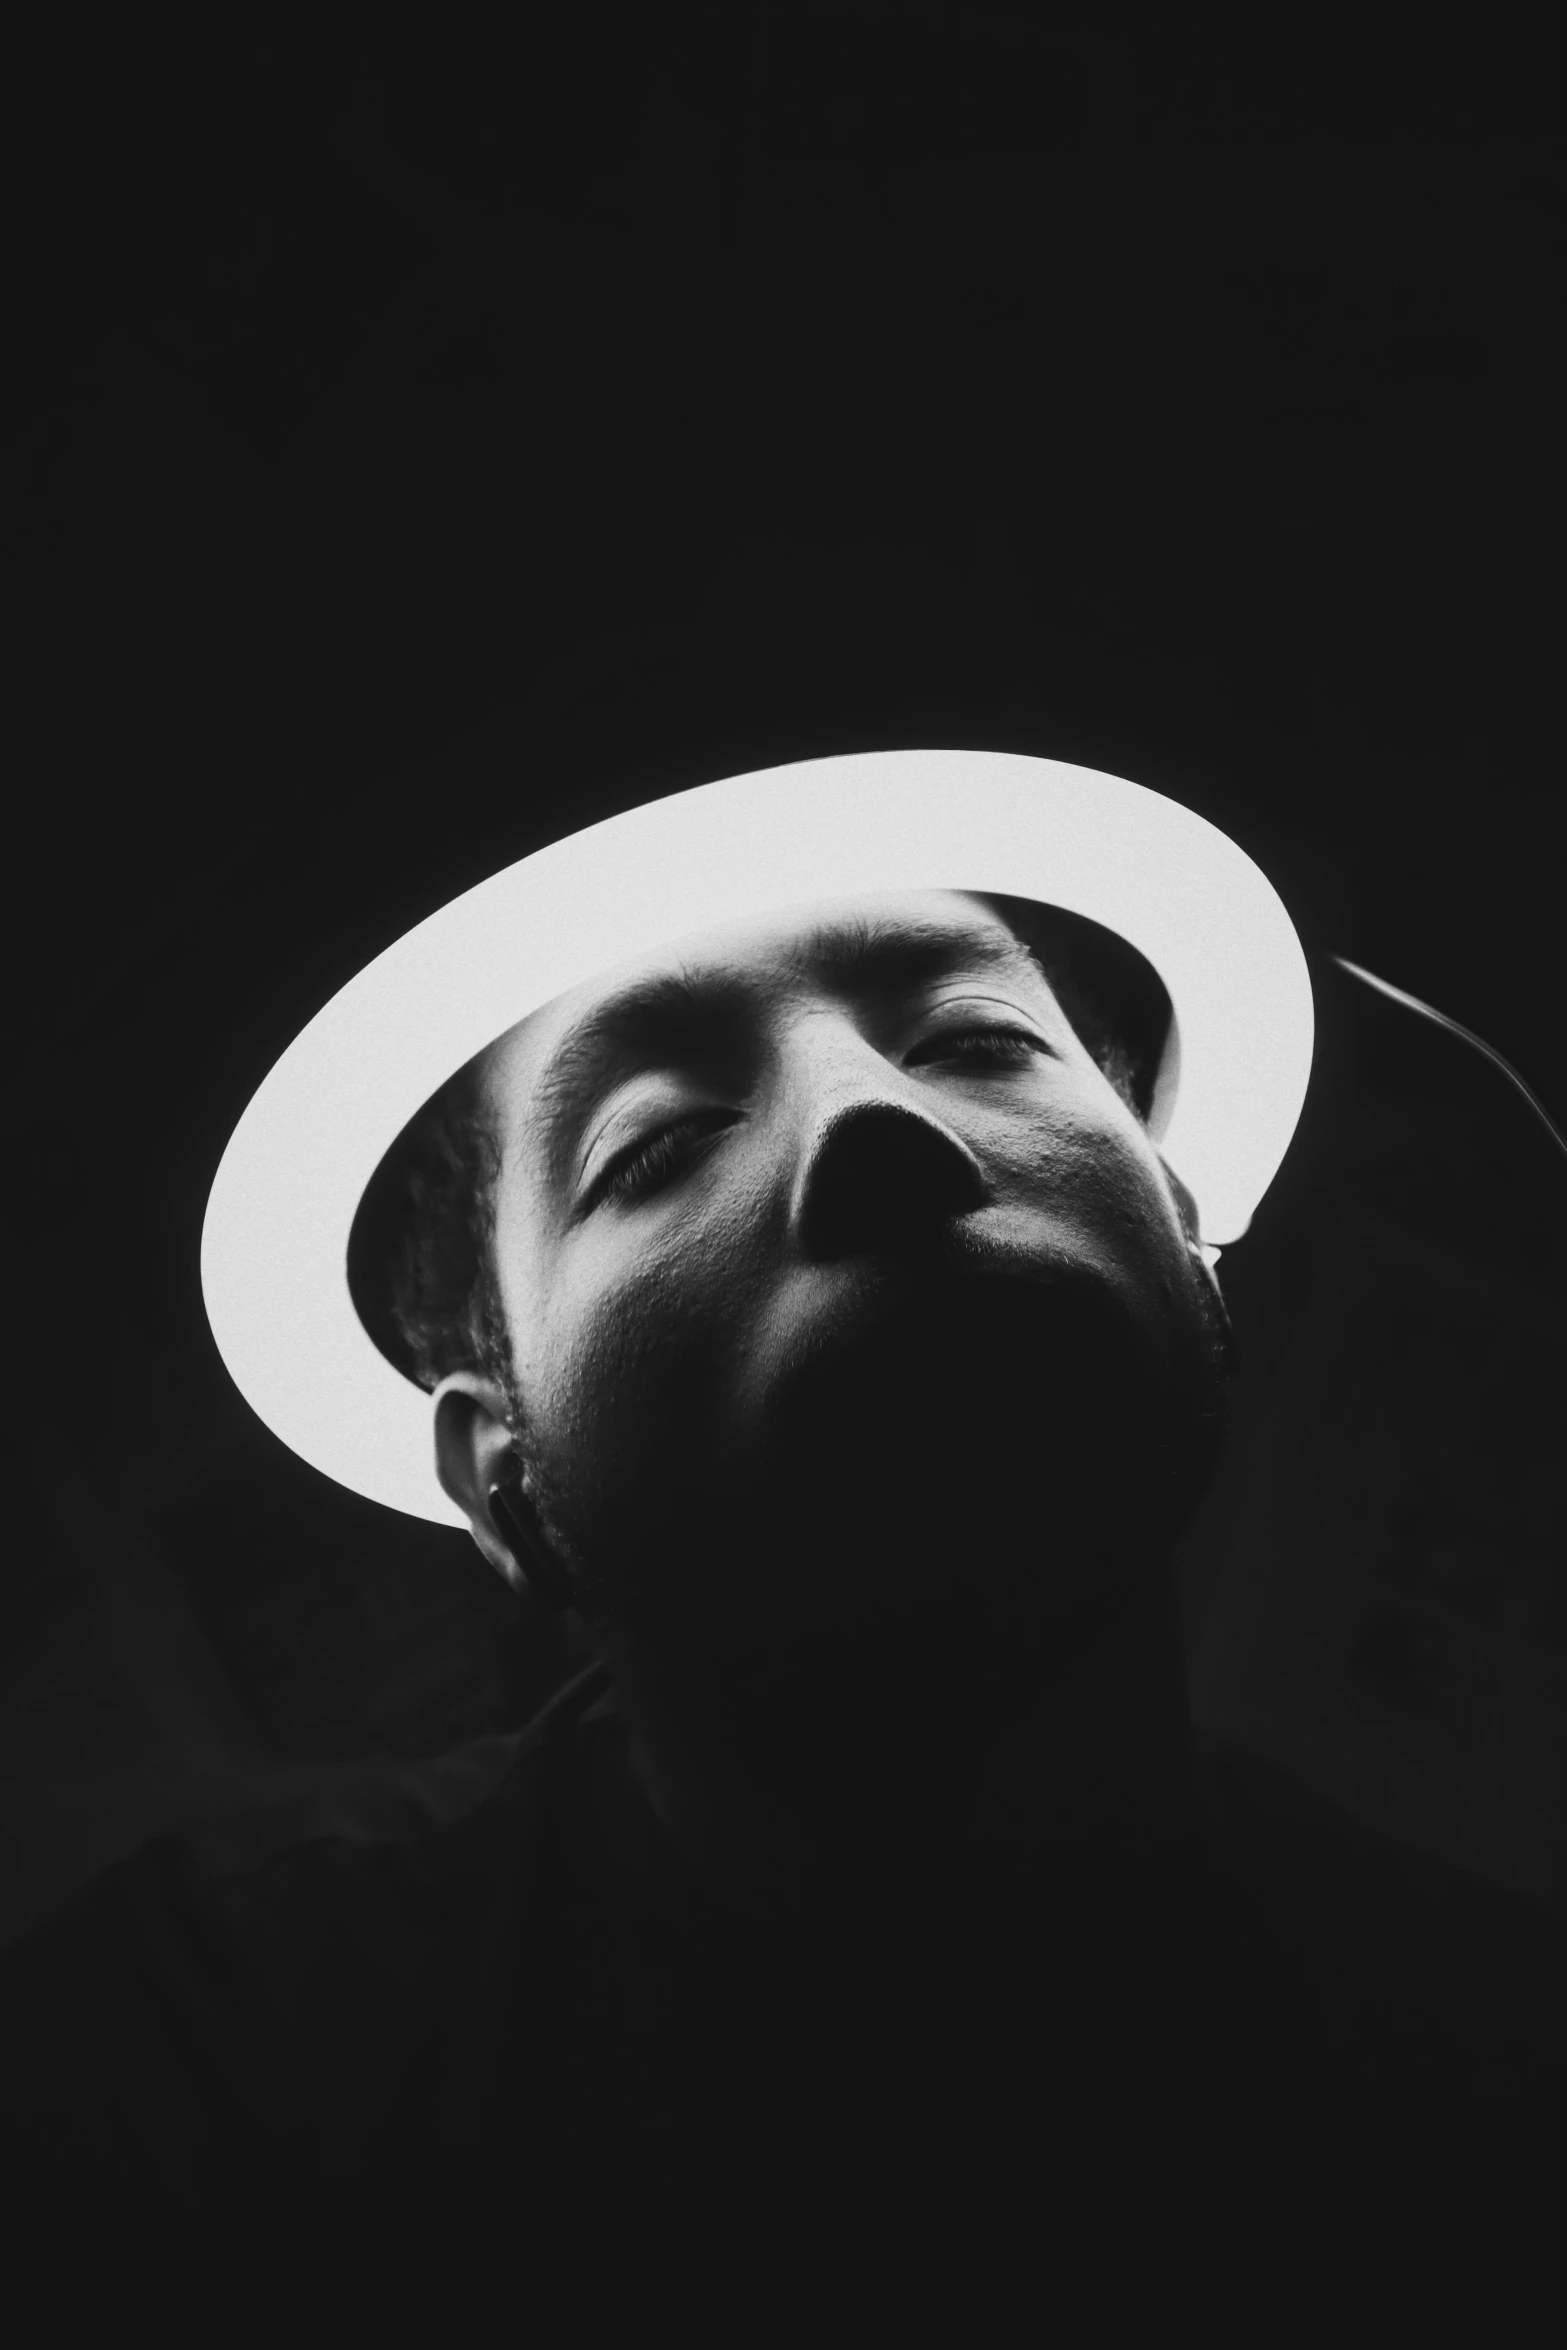 man wearing white hat looking upward, against black background